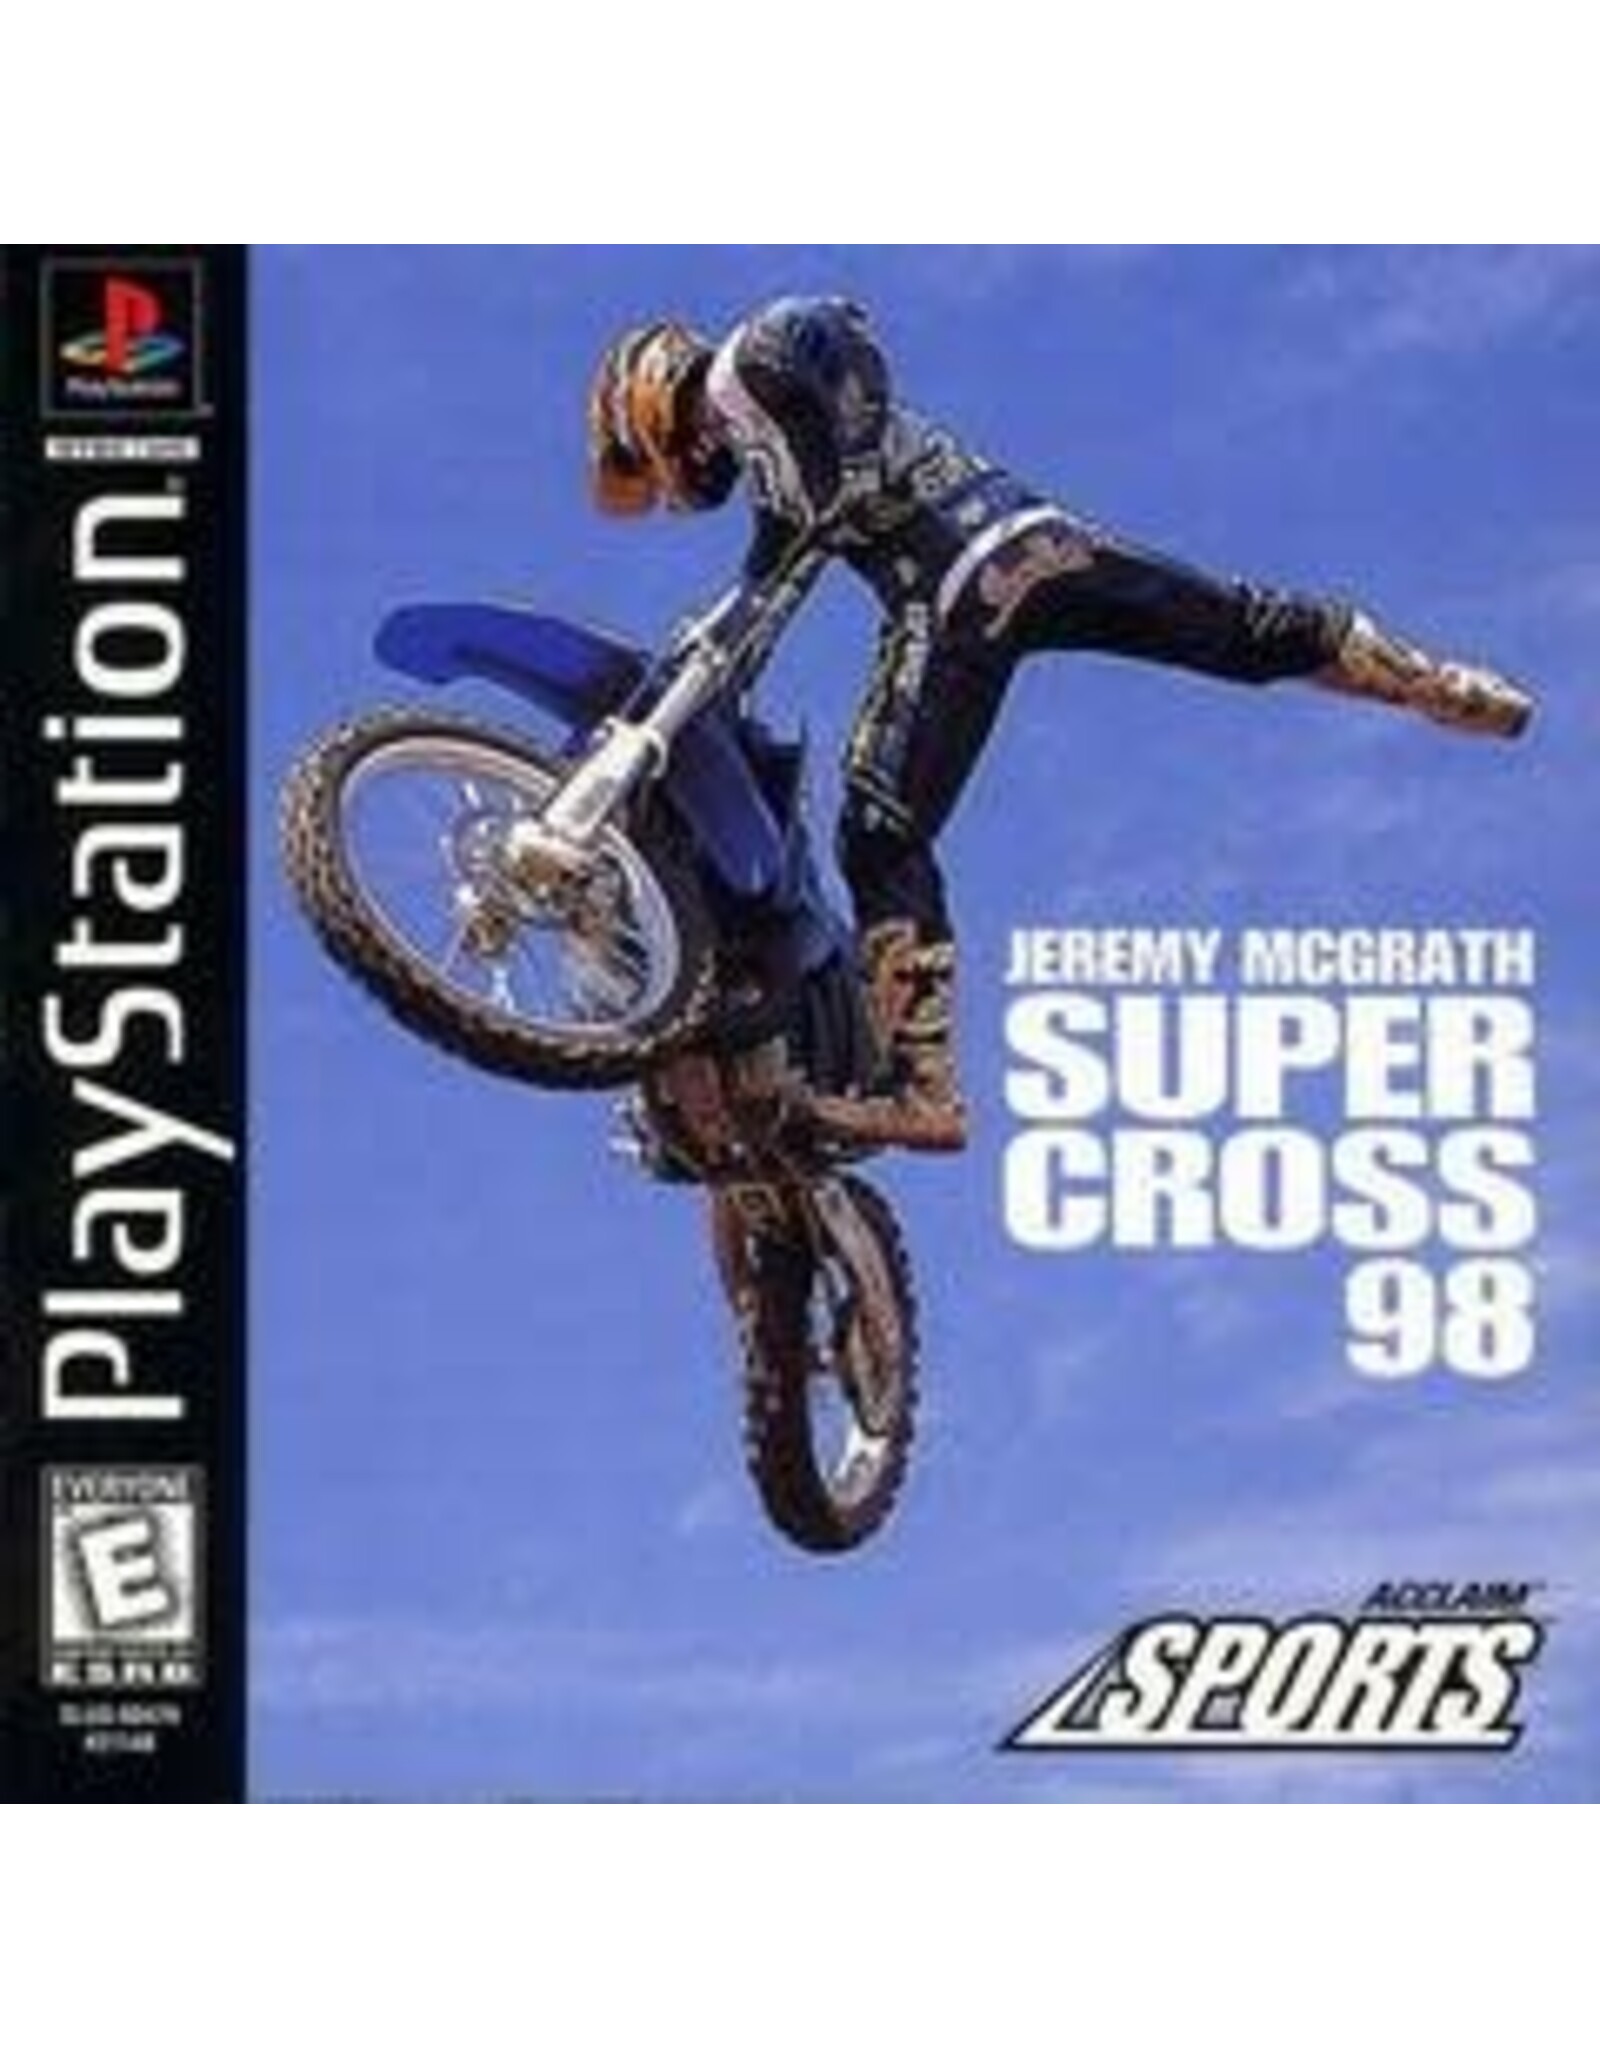 Playstation Jeremy McGrath Supercross 98 (Brand New)